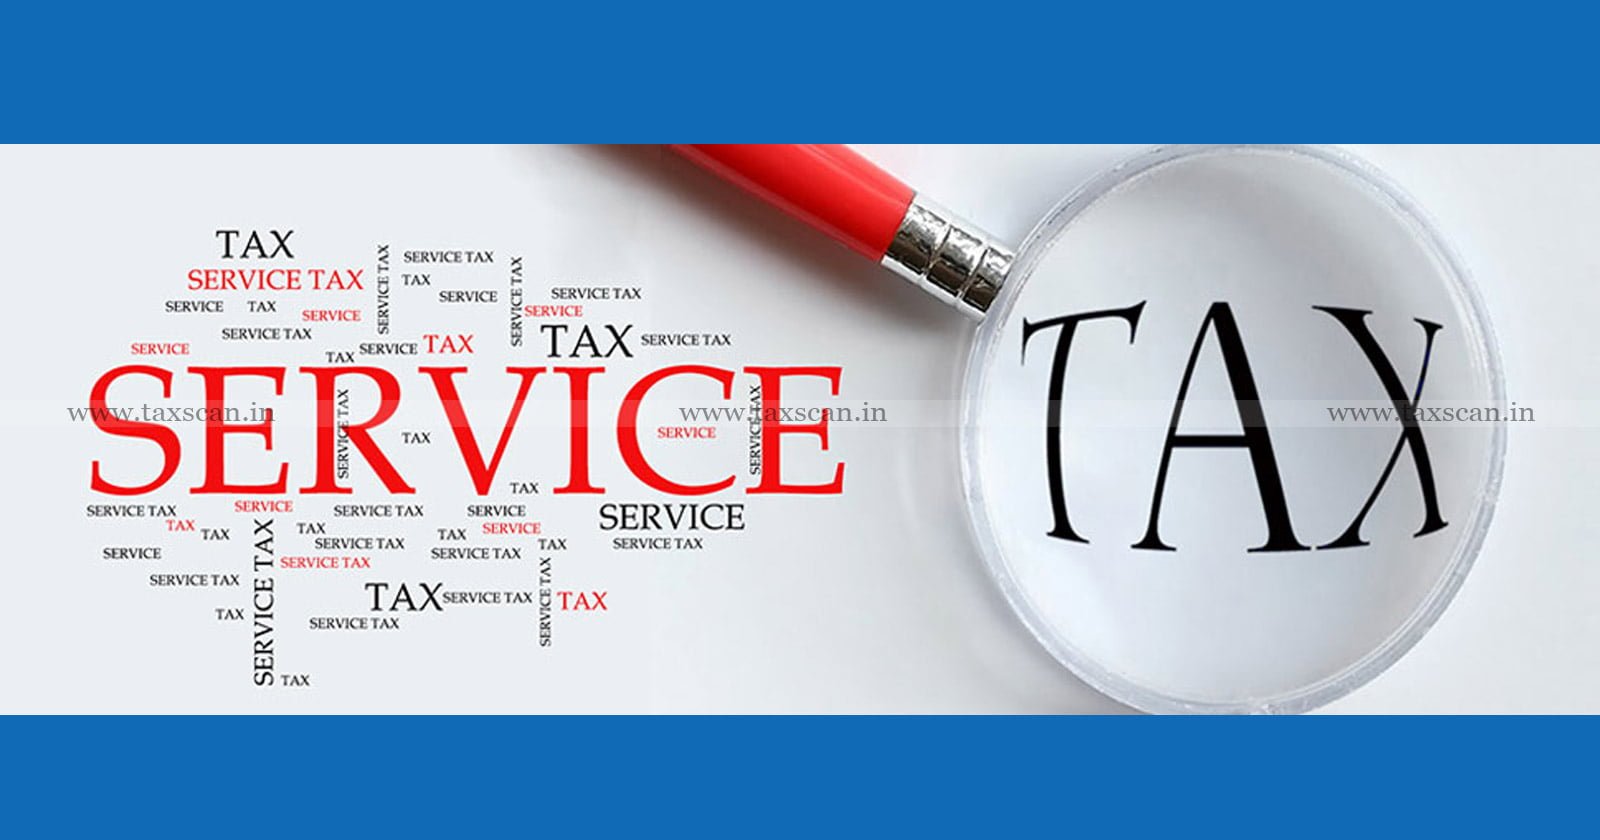 Commissioner(Appeal) - Scope SCN - Service Tax - CESTAT - Taxscan